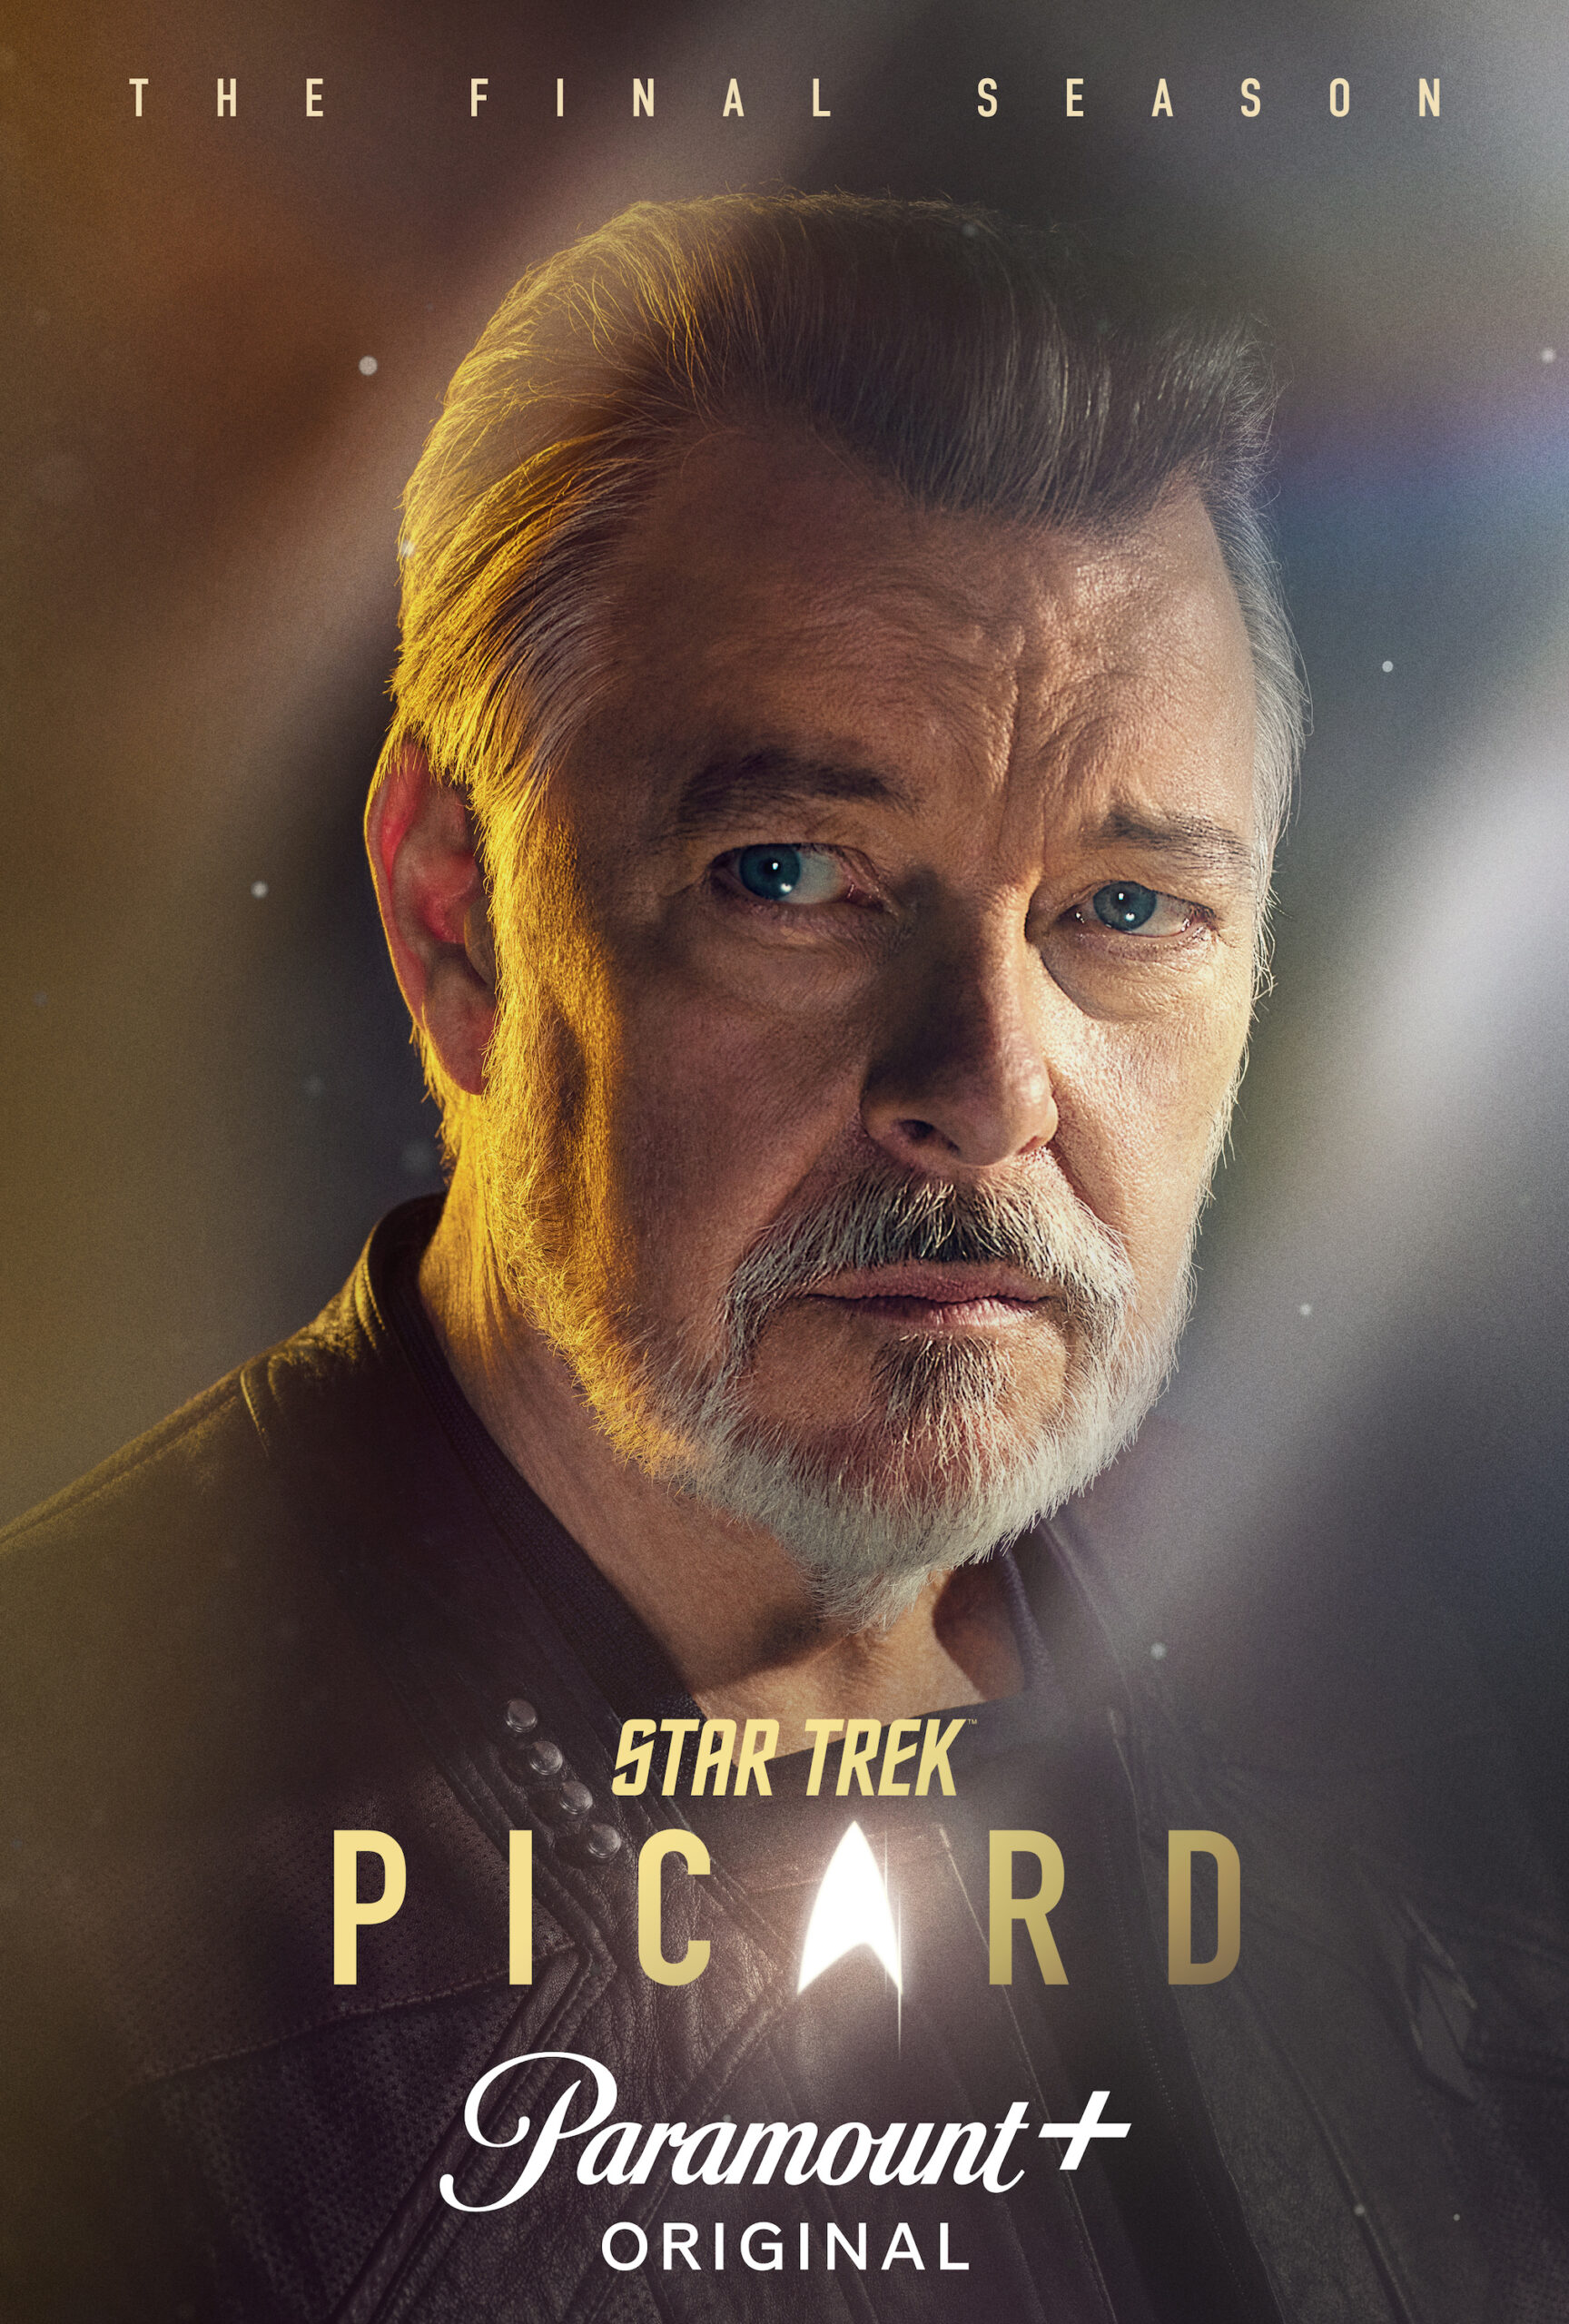 Jonathan Frakes as William T. Riker in Star Trek: Picard